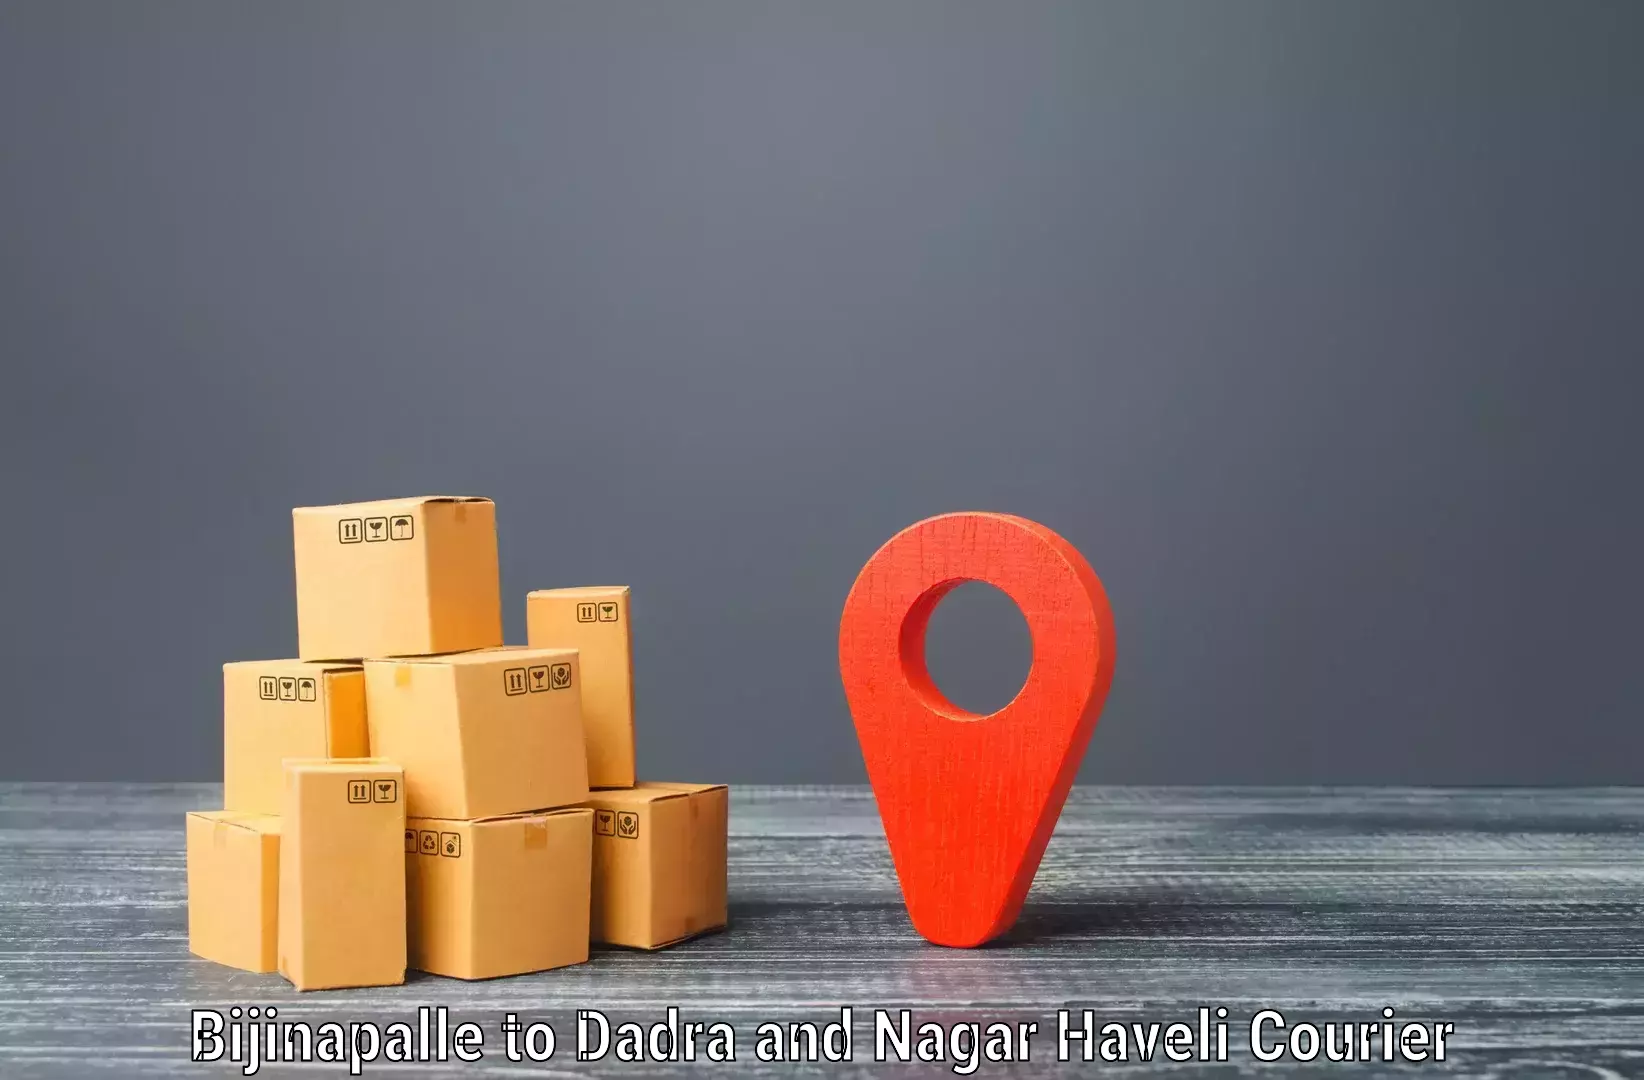 Global logistics network Bijinapalle to Dadra and Nagar Haveli